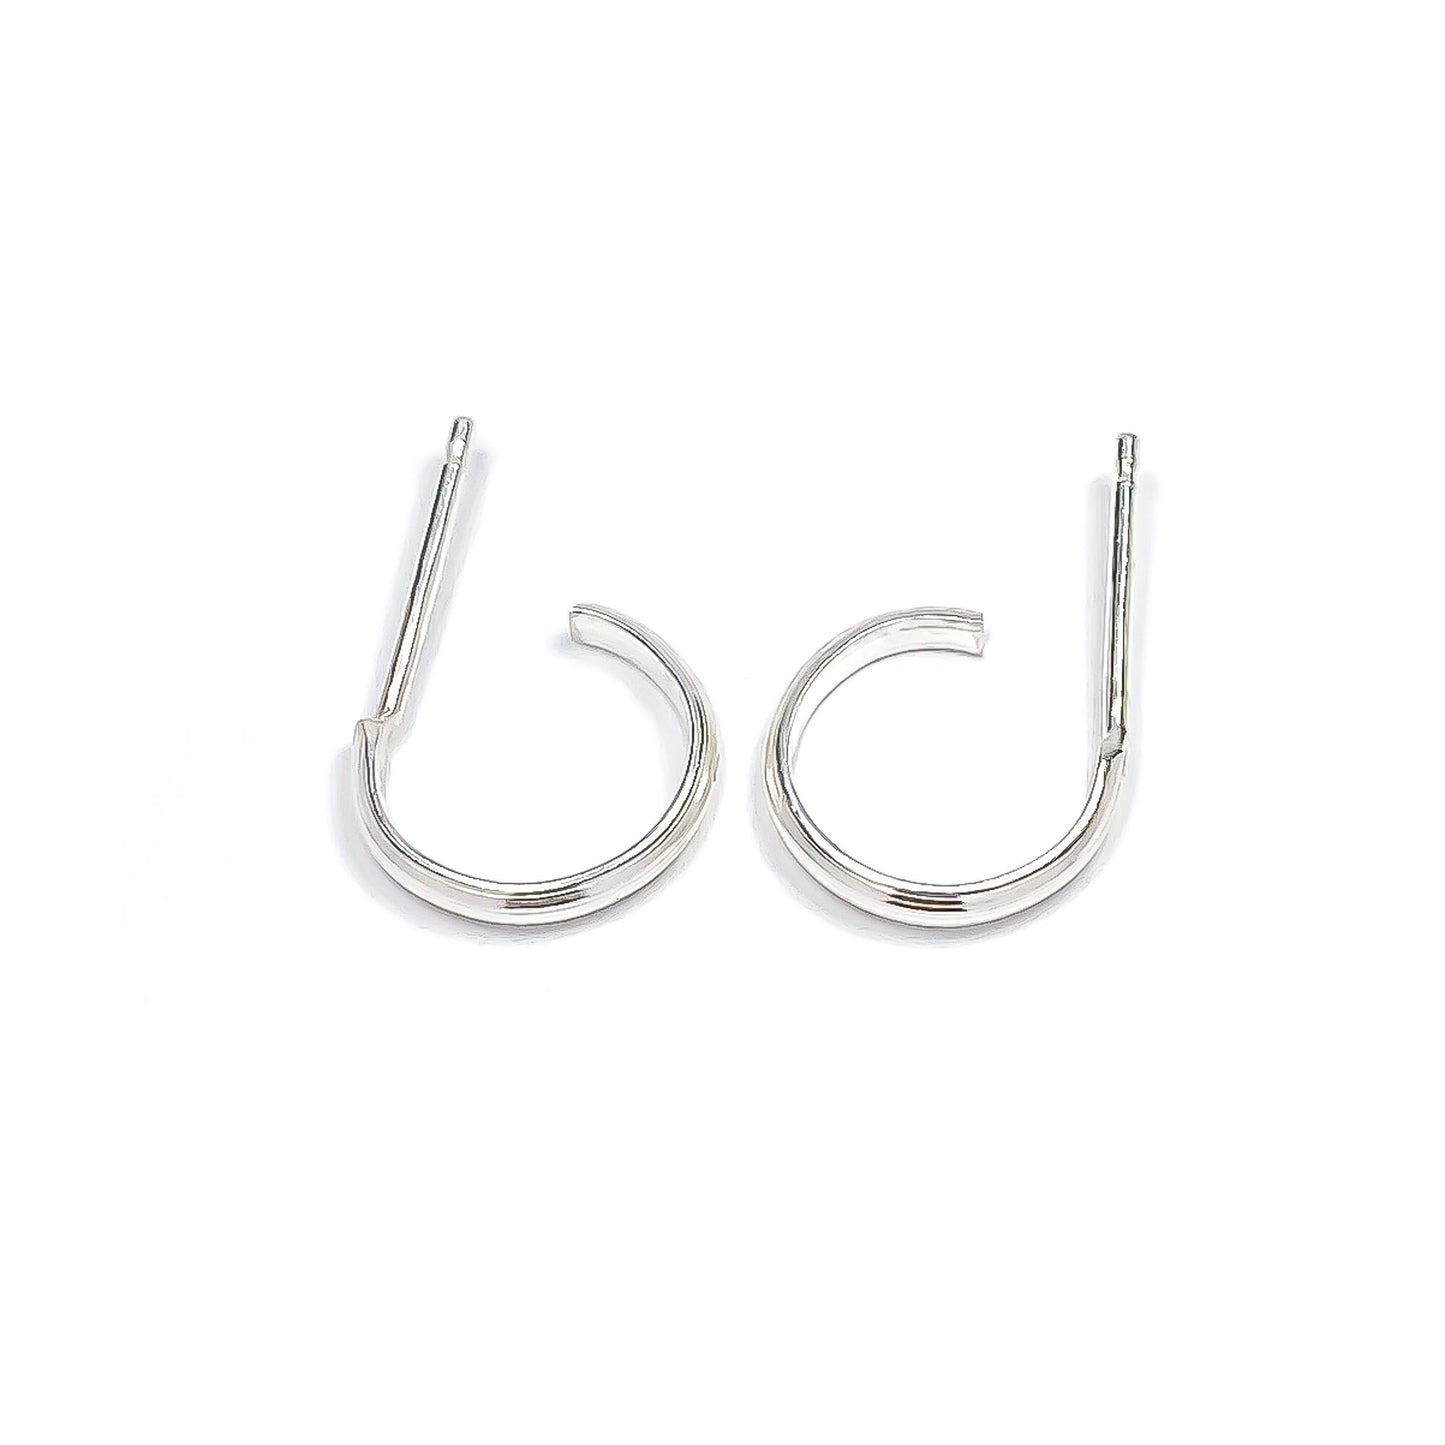 Hammered Hoop Earrings with Post, Sterling Silver